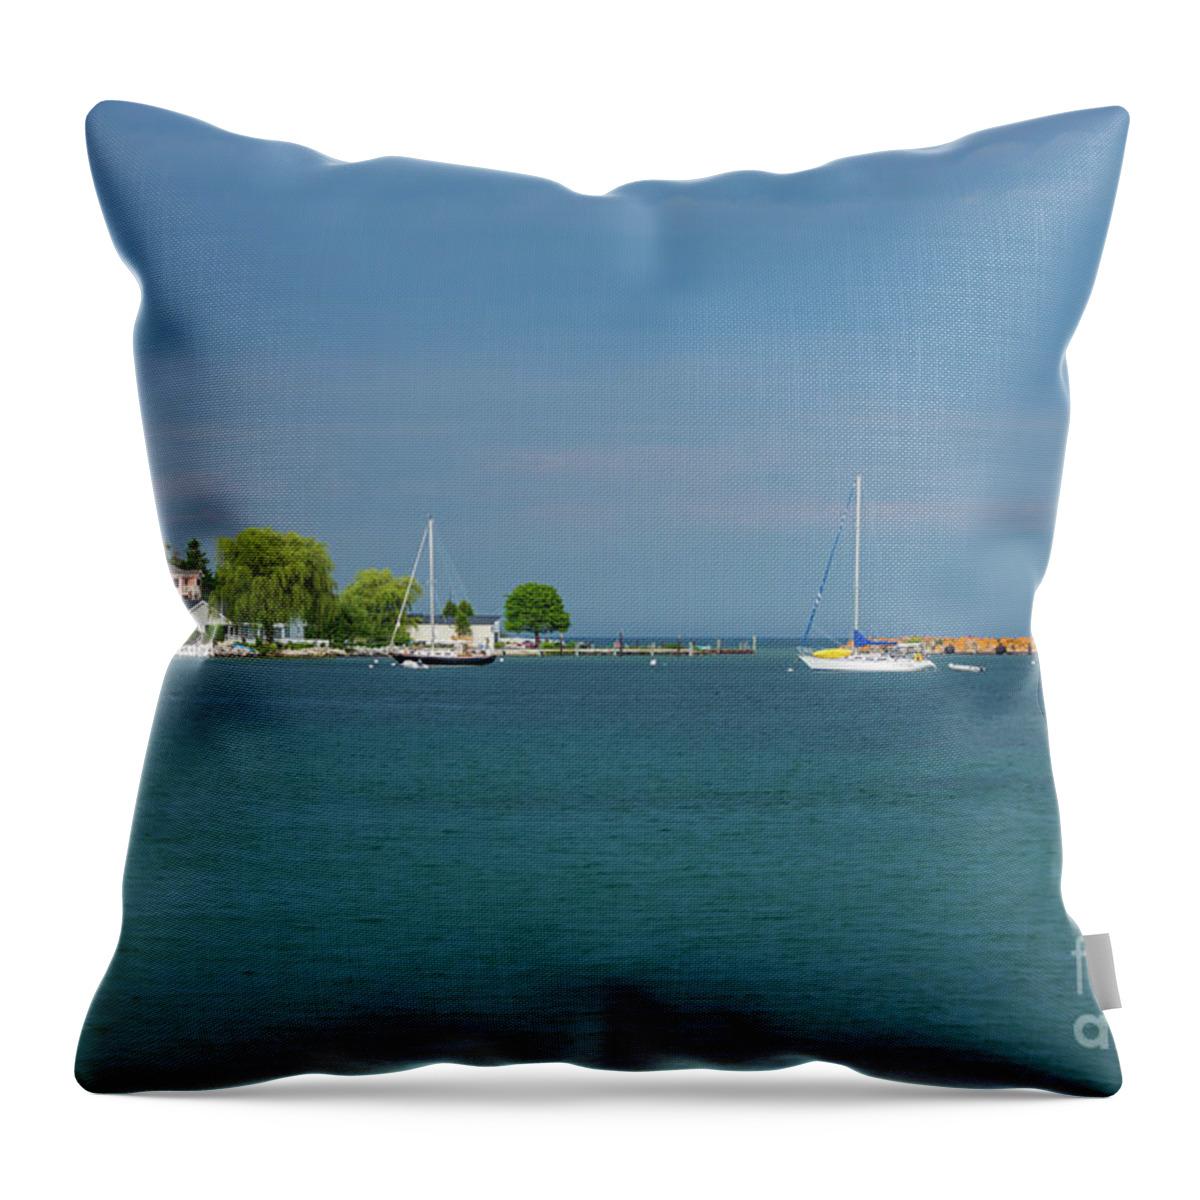 Mackinac Island Throw Pillow featuring the photograph Harbor Mackinac Island by Jennifer White